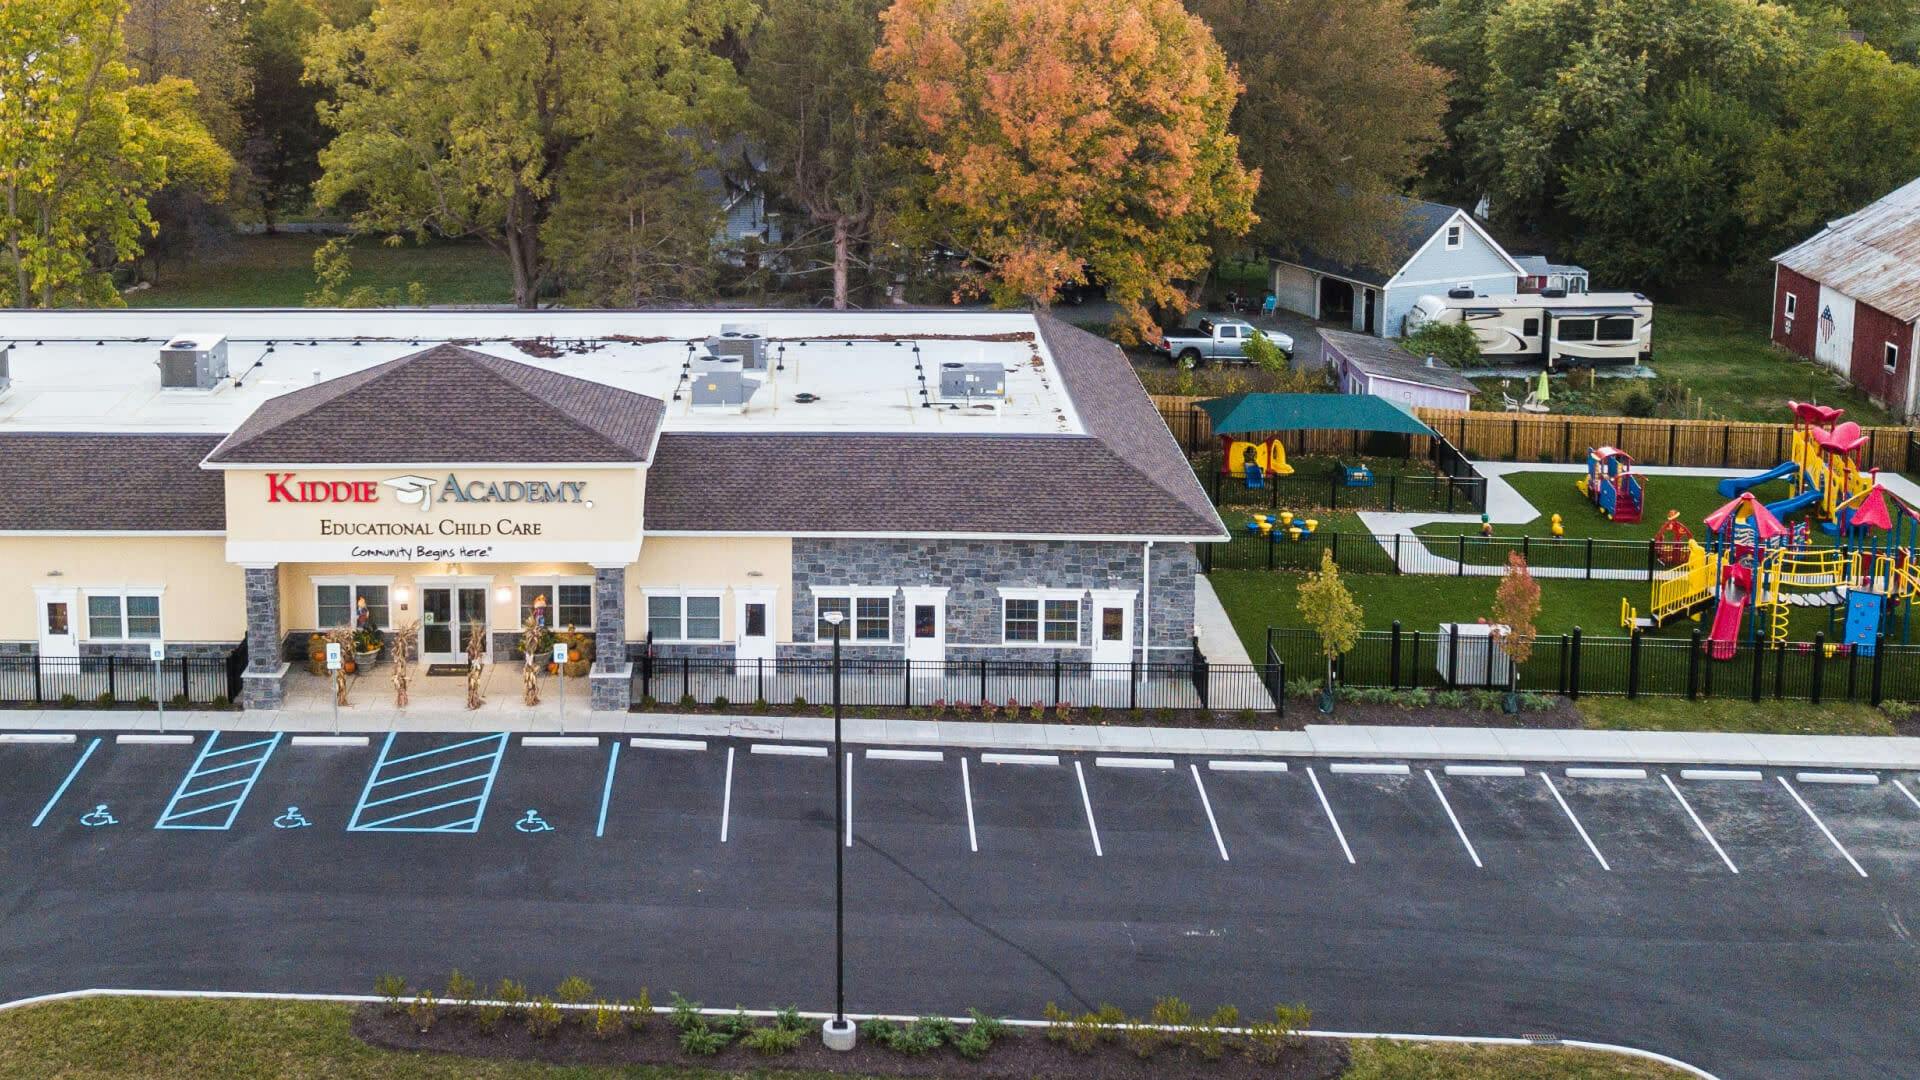 Aerial shot of Kiddie Academy education center